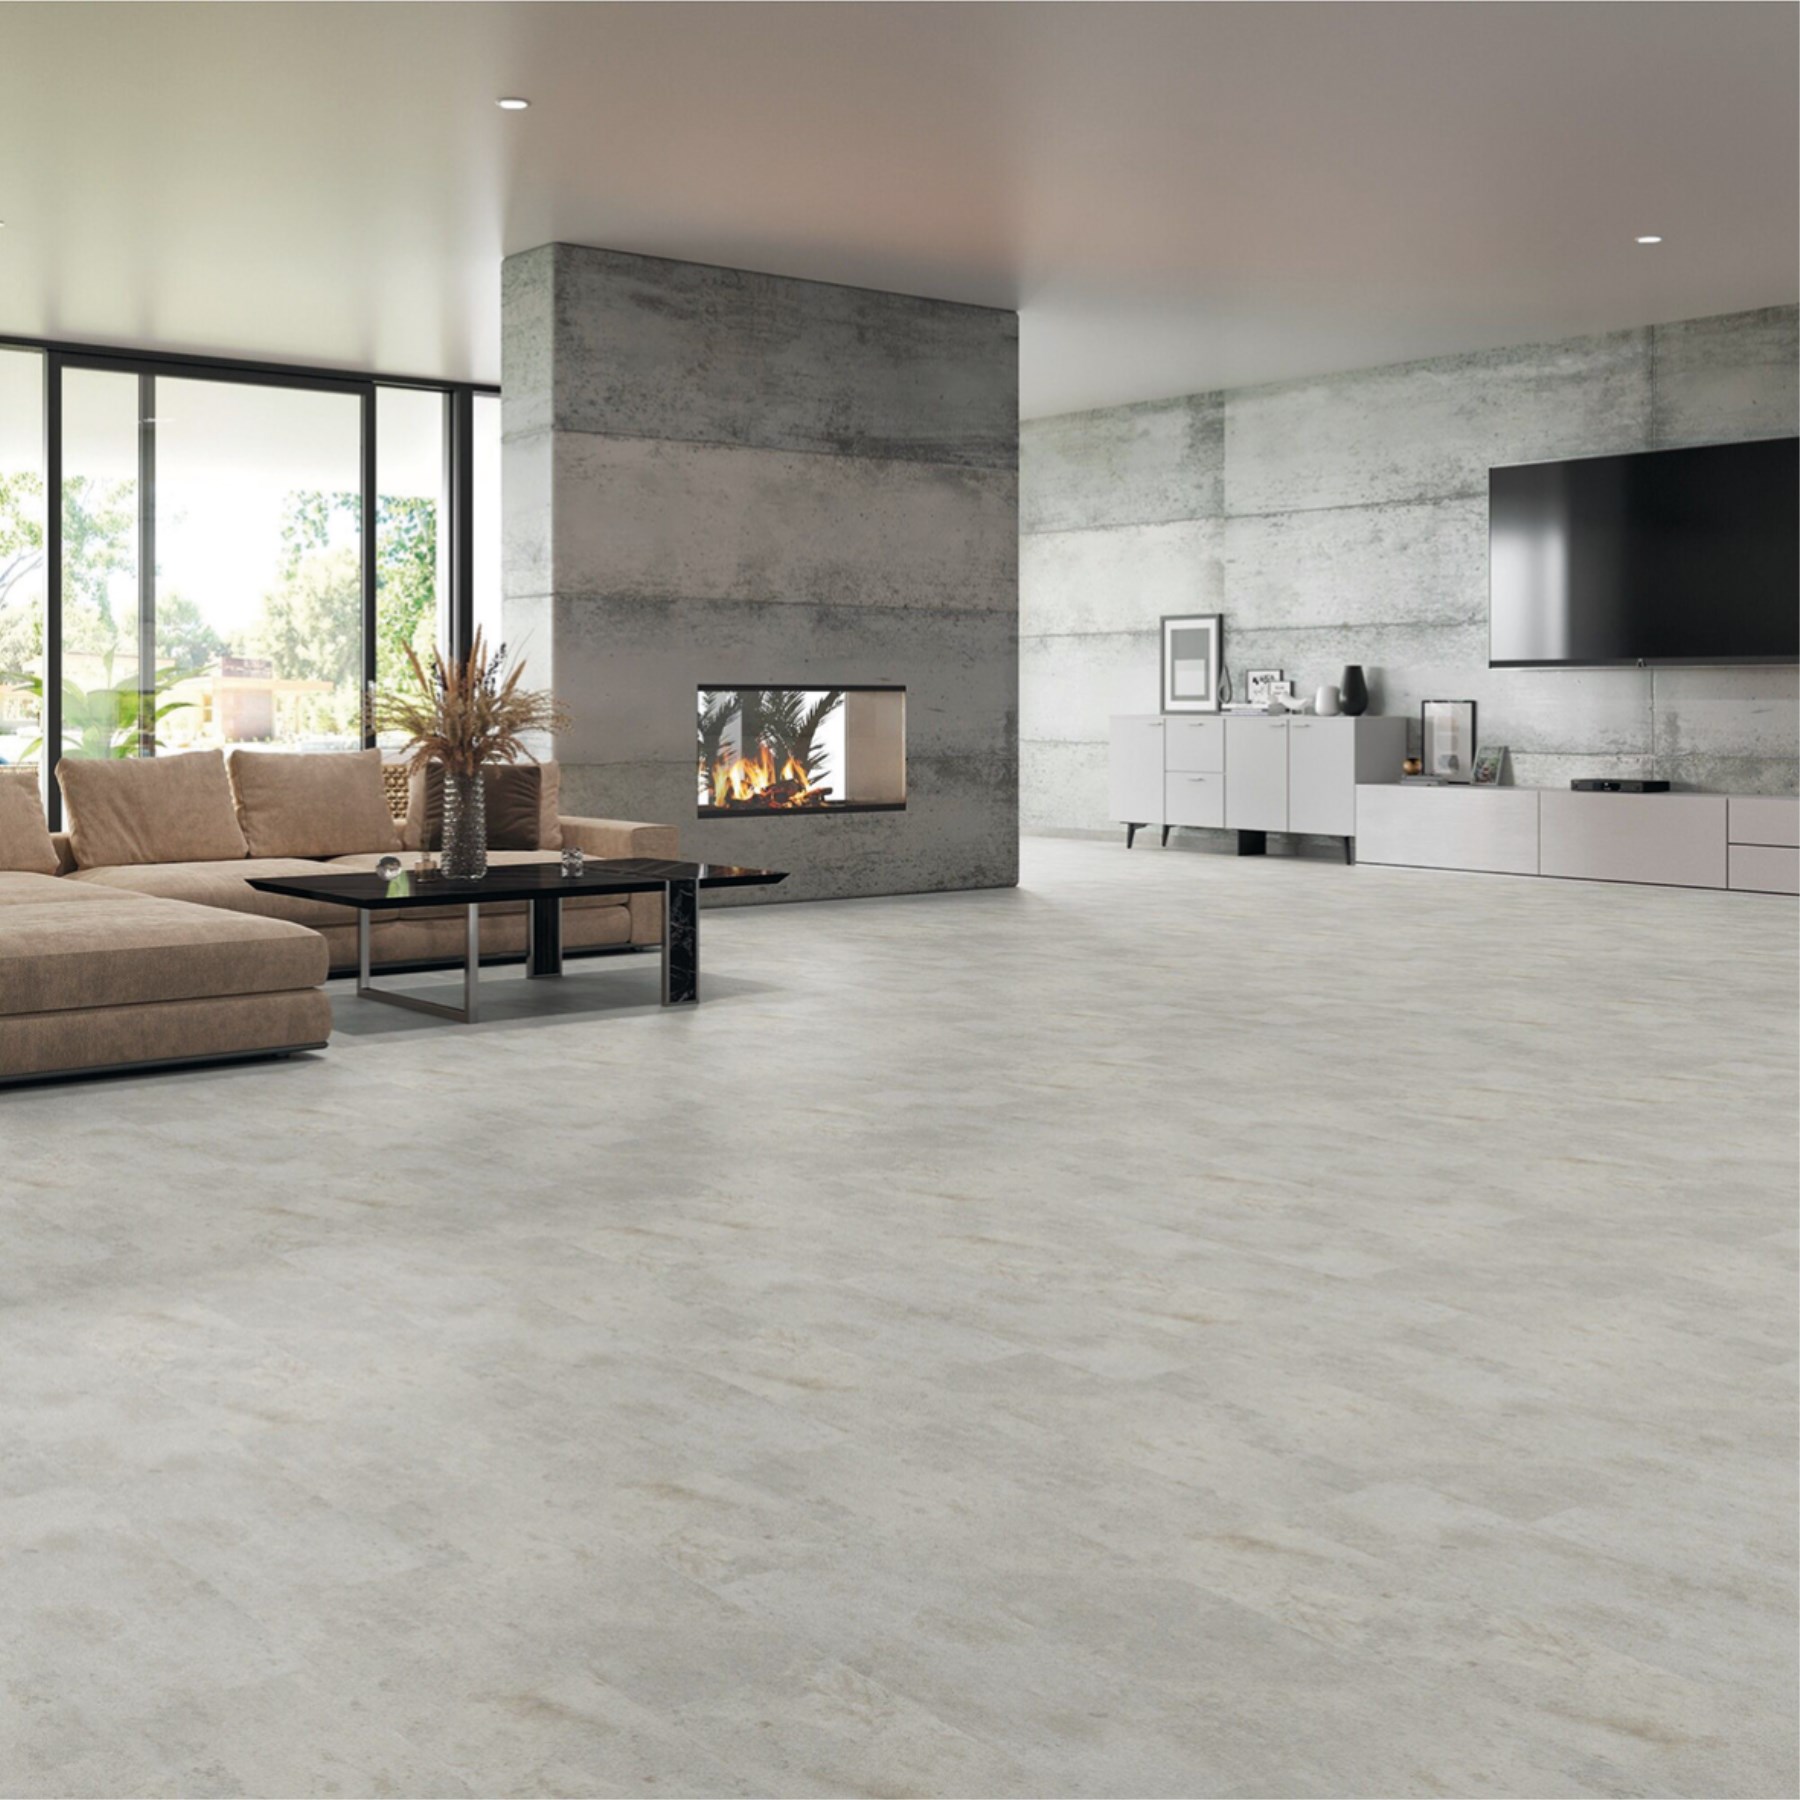 1253382 - Vinylboden Eleganto Beton Silber sand lackiert